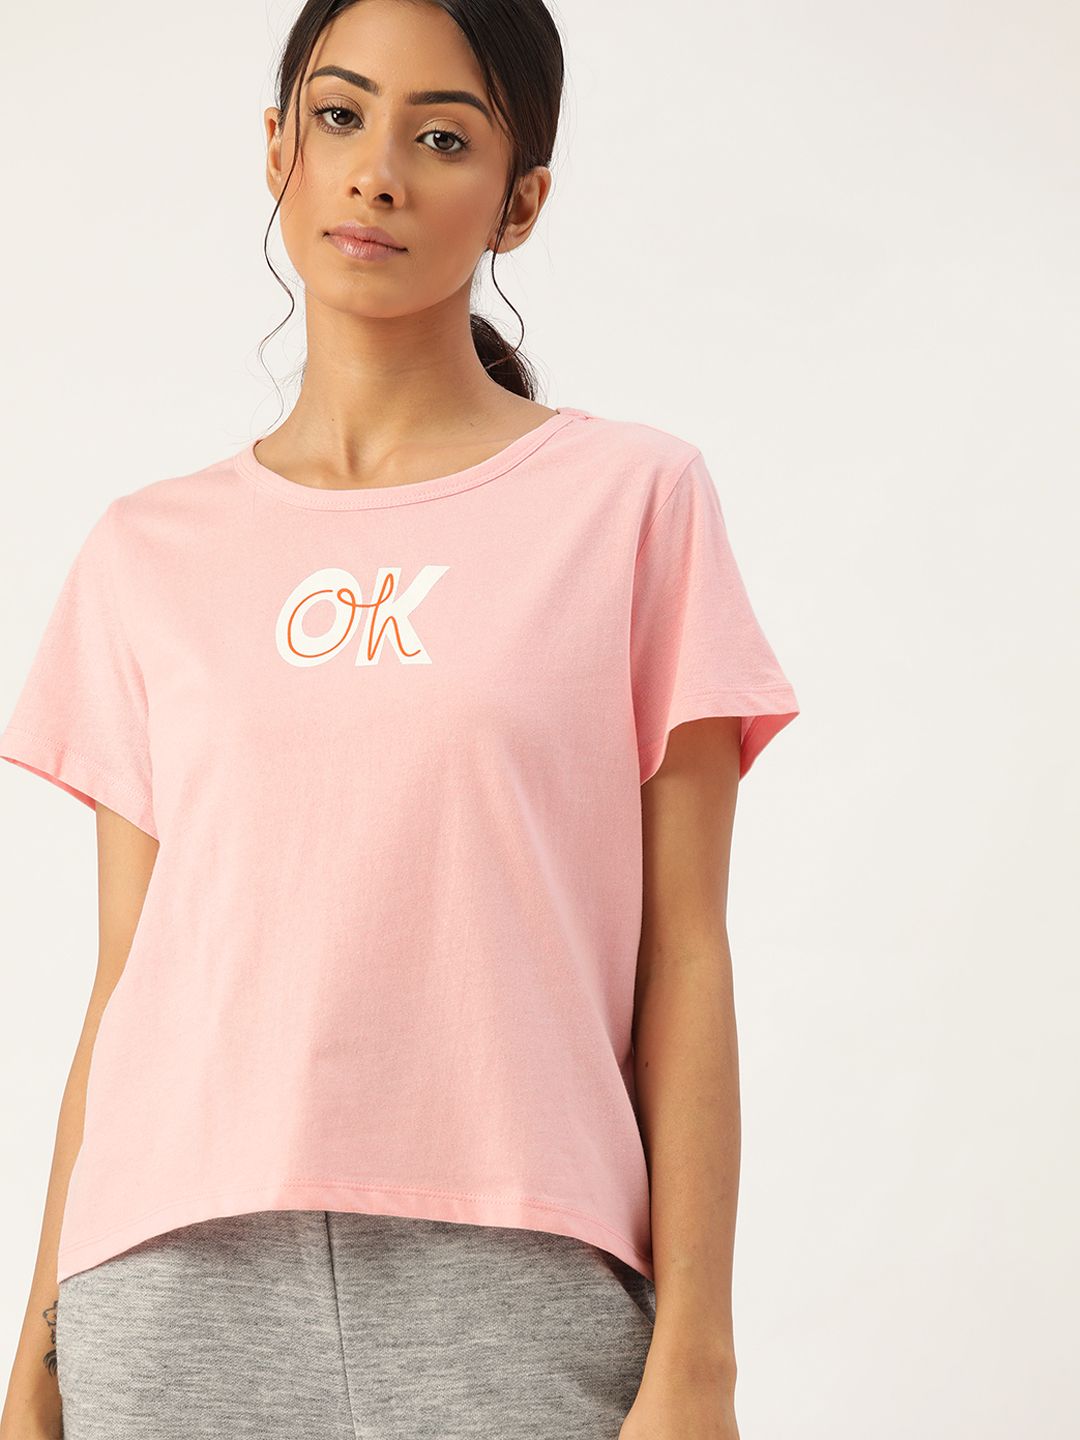 ETC Women Pink Typography Print Round Neck Lounge T-shirt Price in India